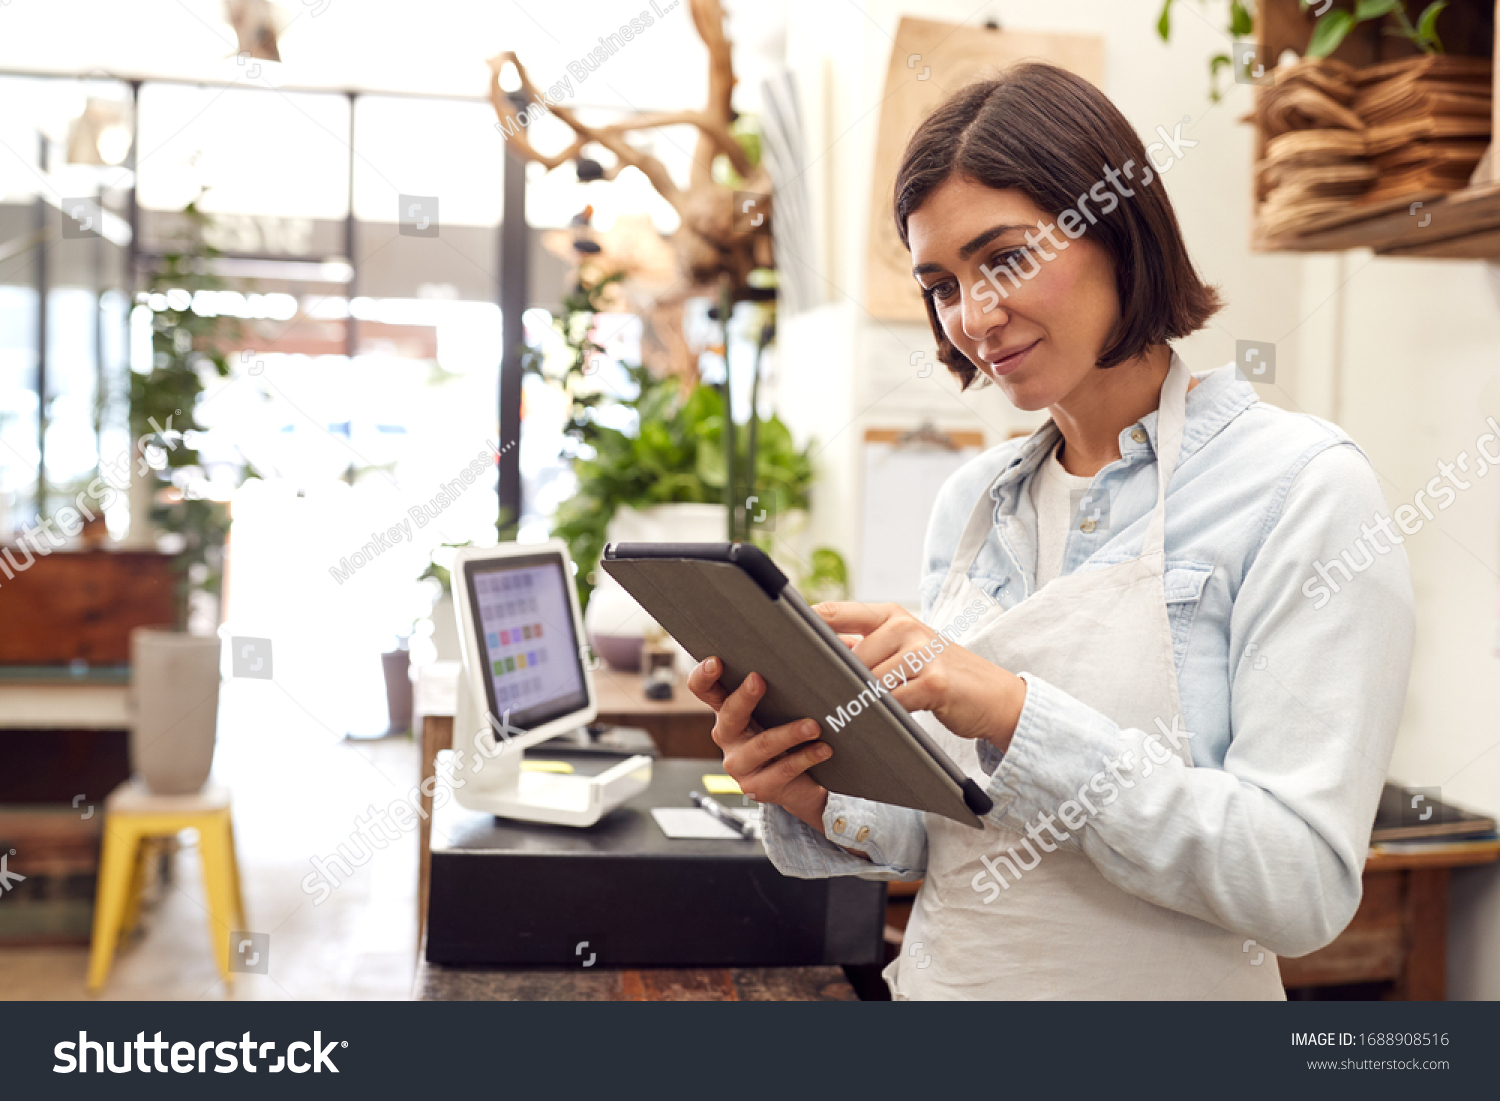 Female Owner With Digital Tablet Standing Behind Sales Desk Of Florists Store #1688908516